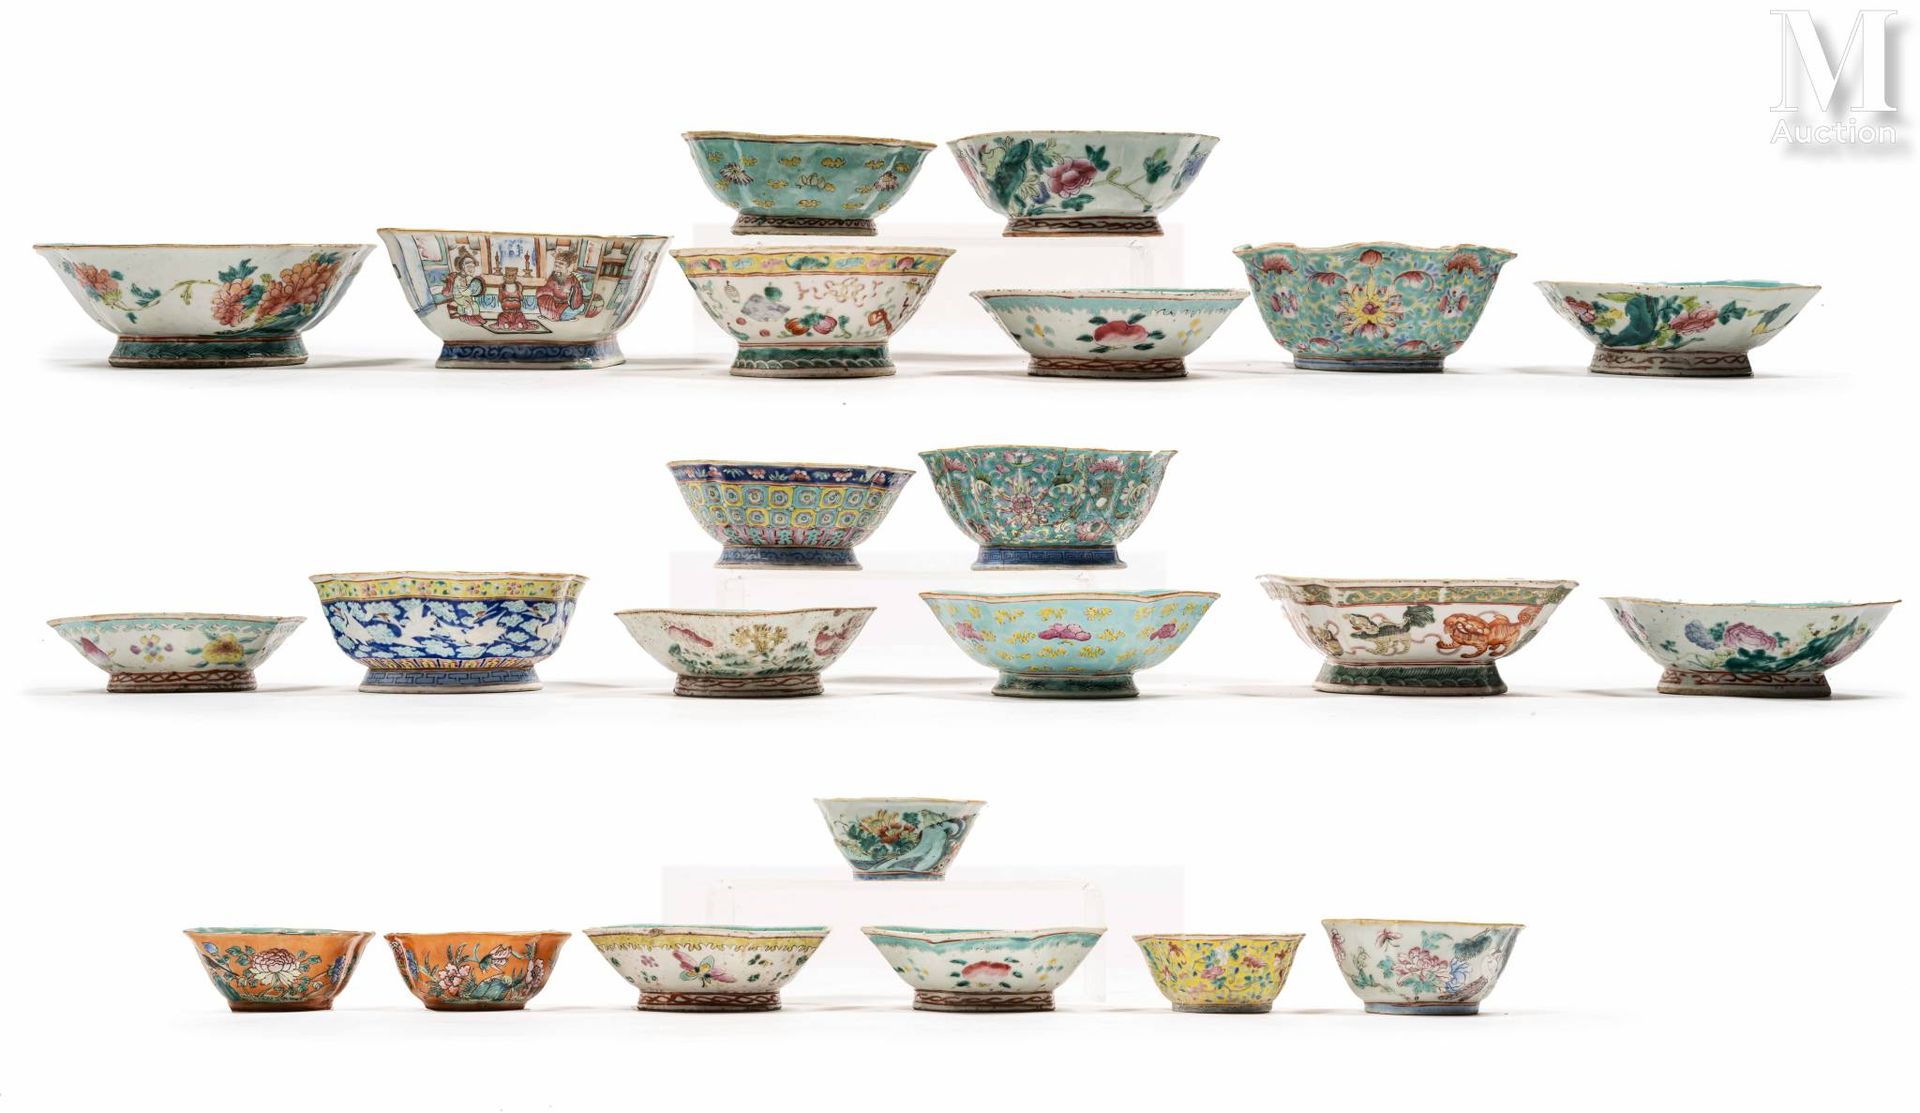 CHINE, XXe siècle 一套21个不同形状的瓷杯，带有花和鸟的多色珐琅装饰，内部上了绿松石釉。

磨损、破损、裂缝。